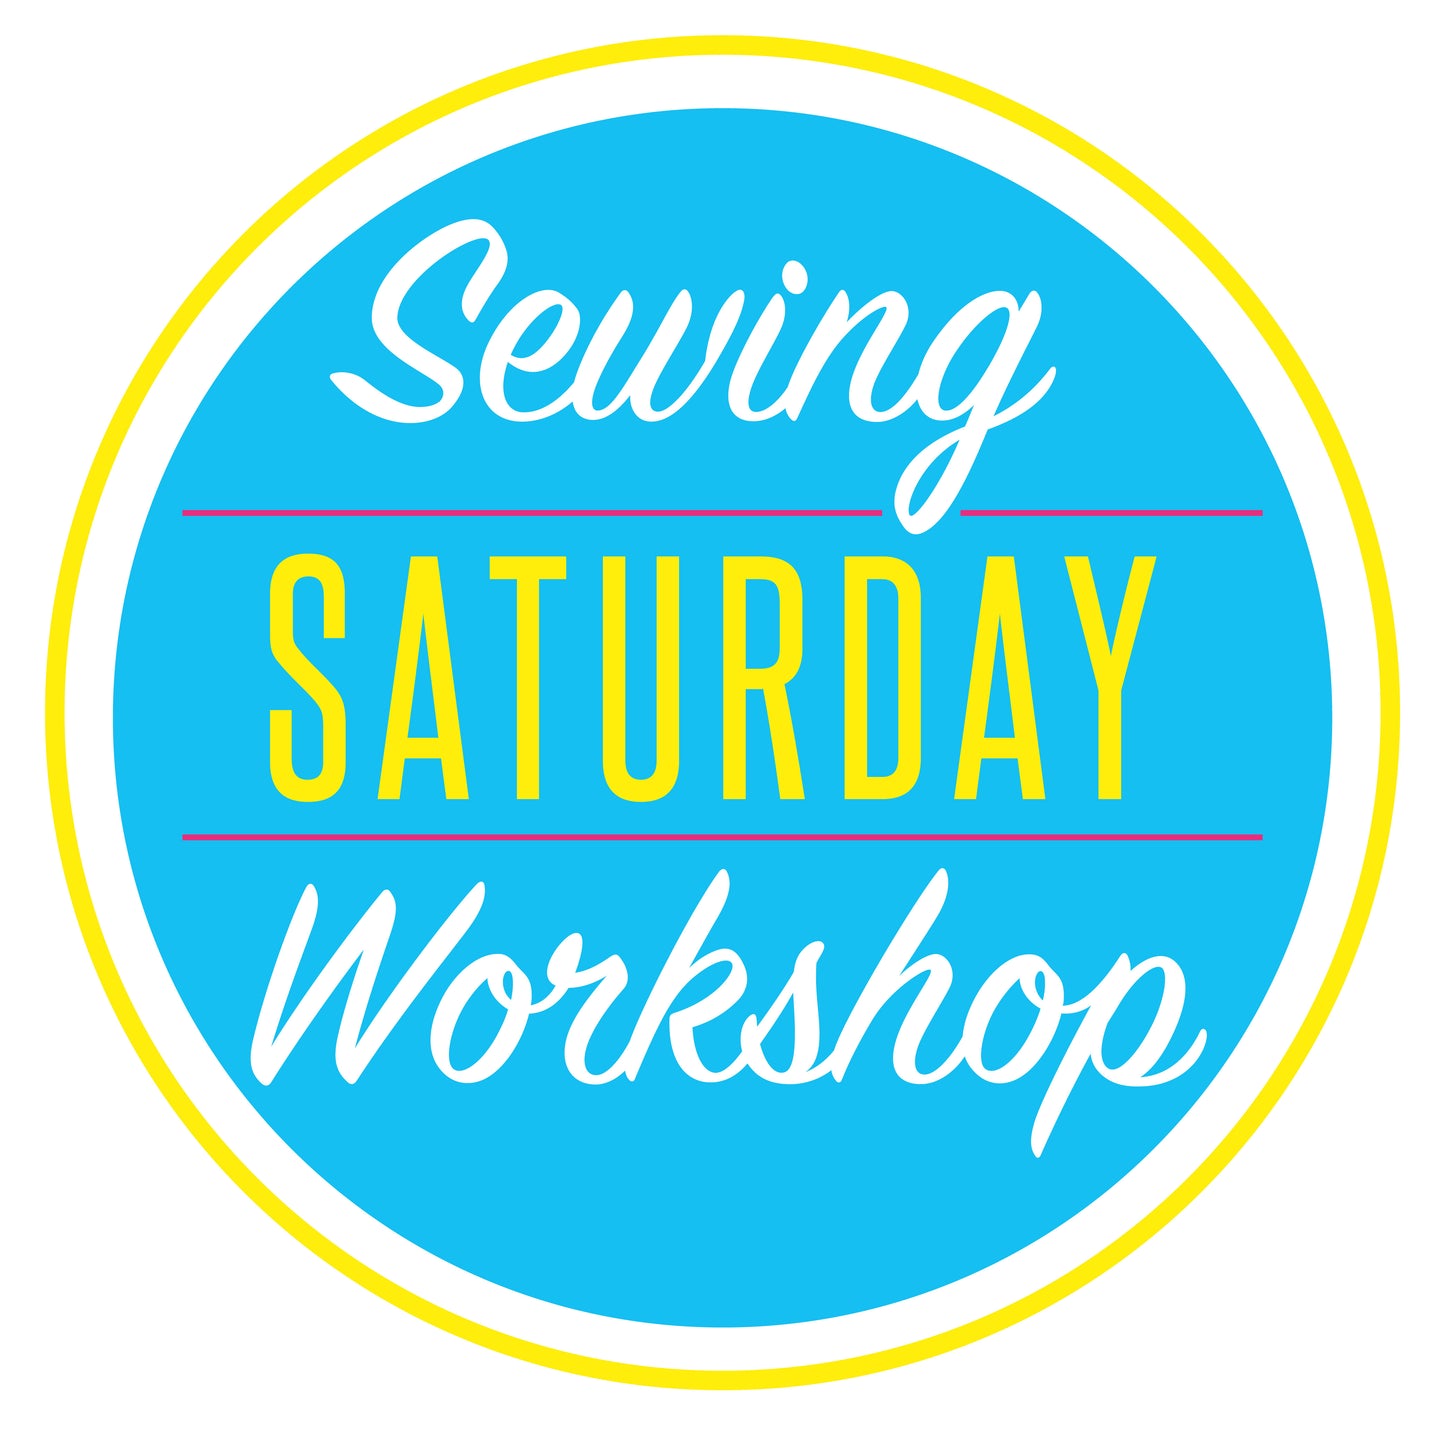 Sewing Workshop: Saturday, May 18, 9am-3pm